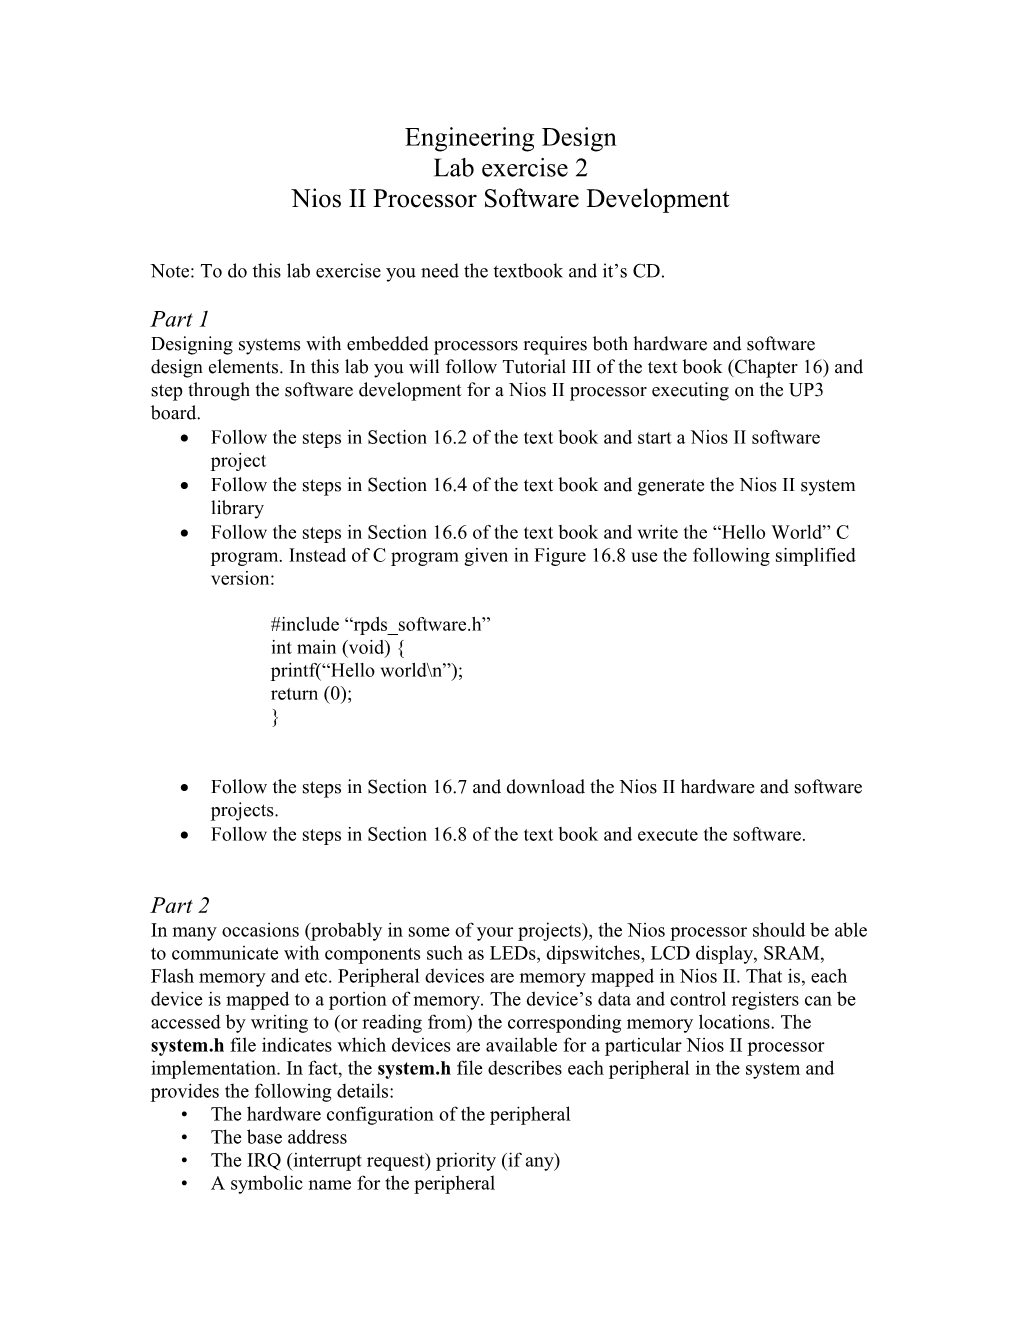 Nios II Processor Software Development